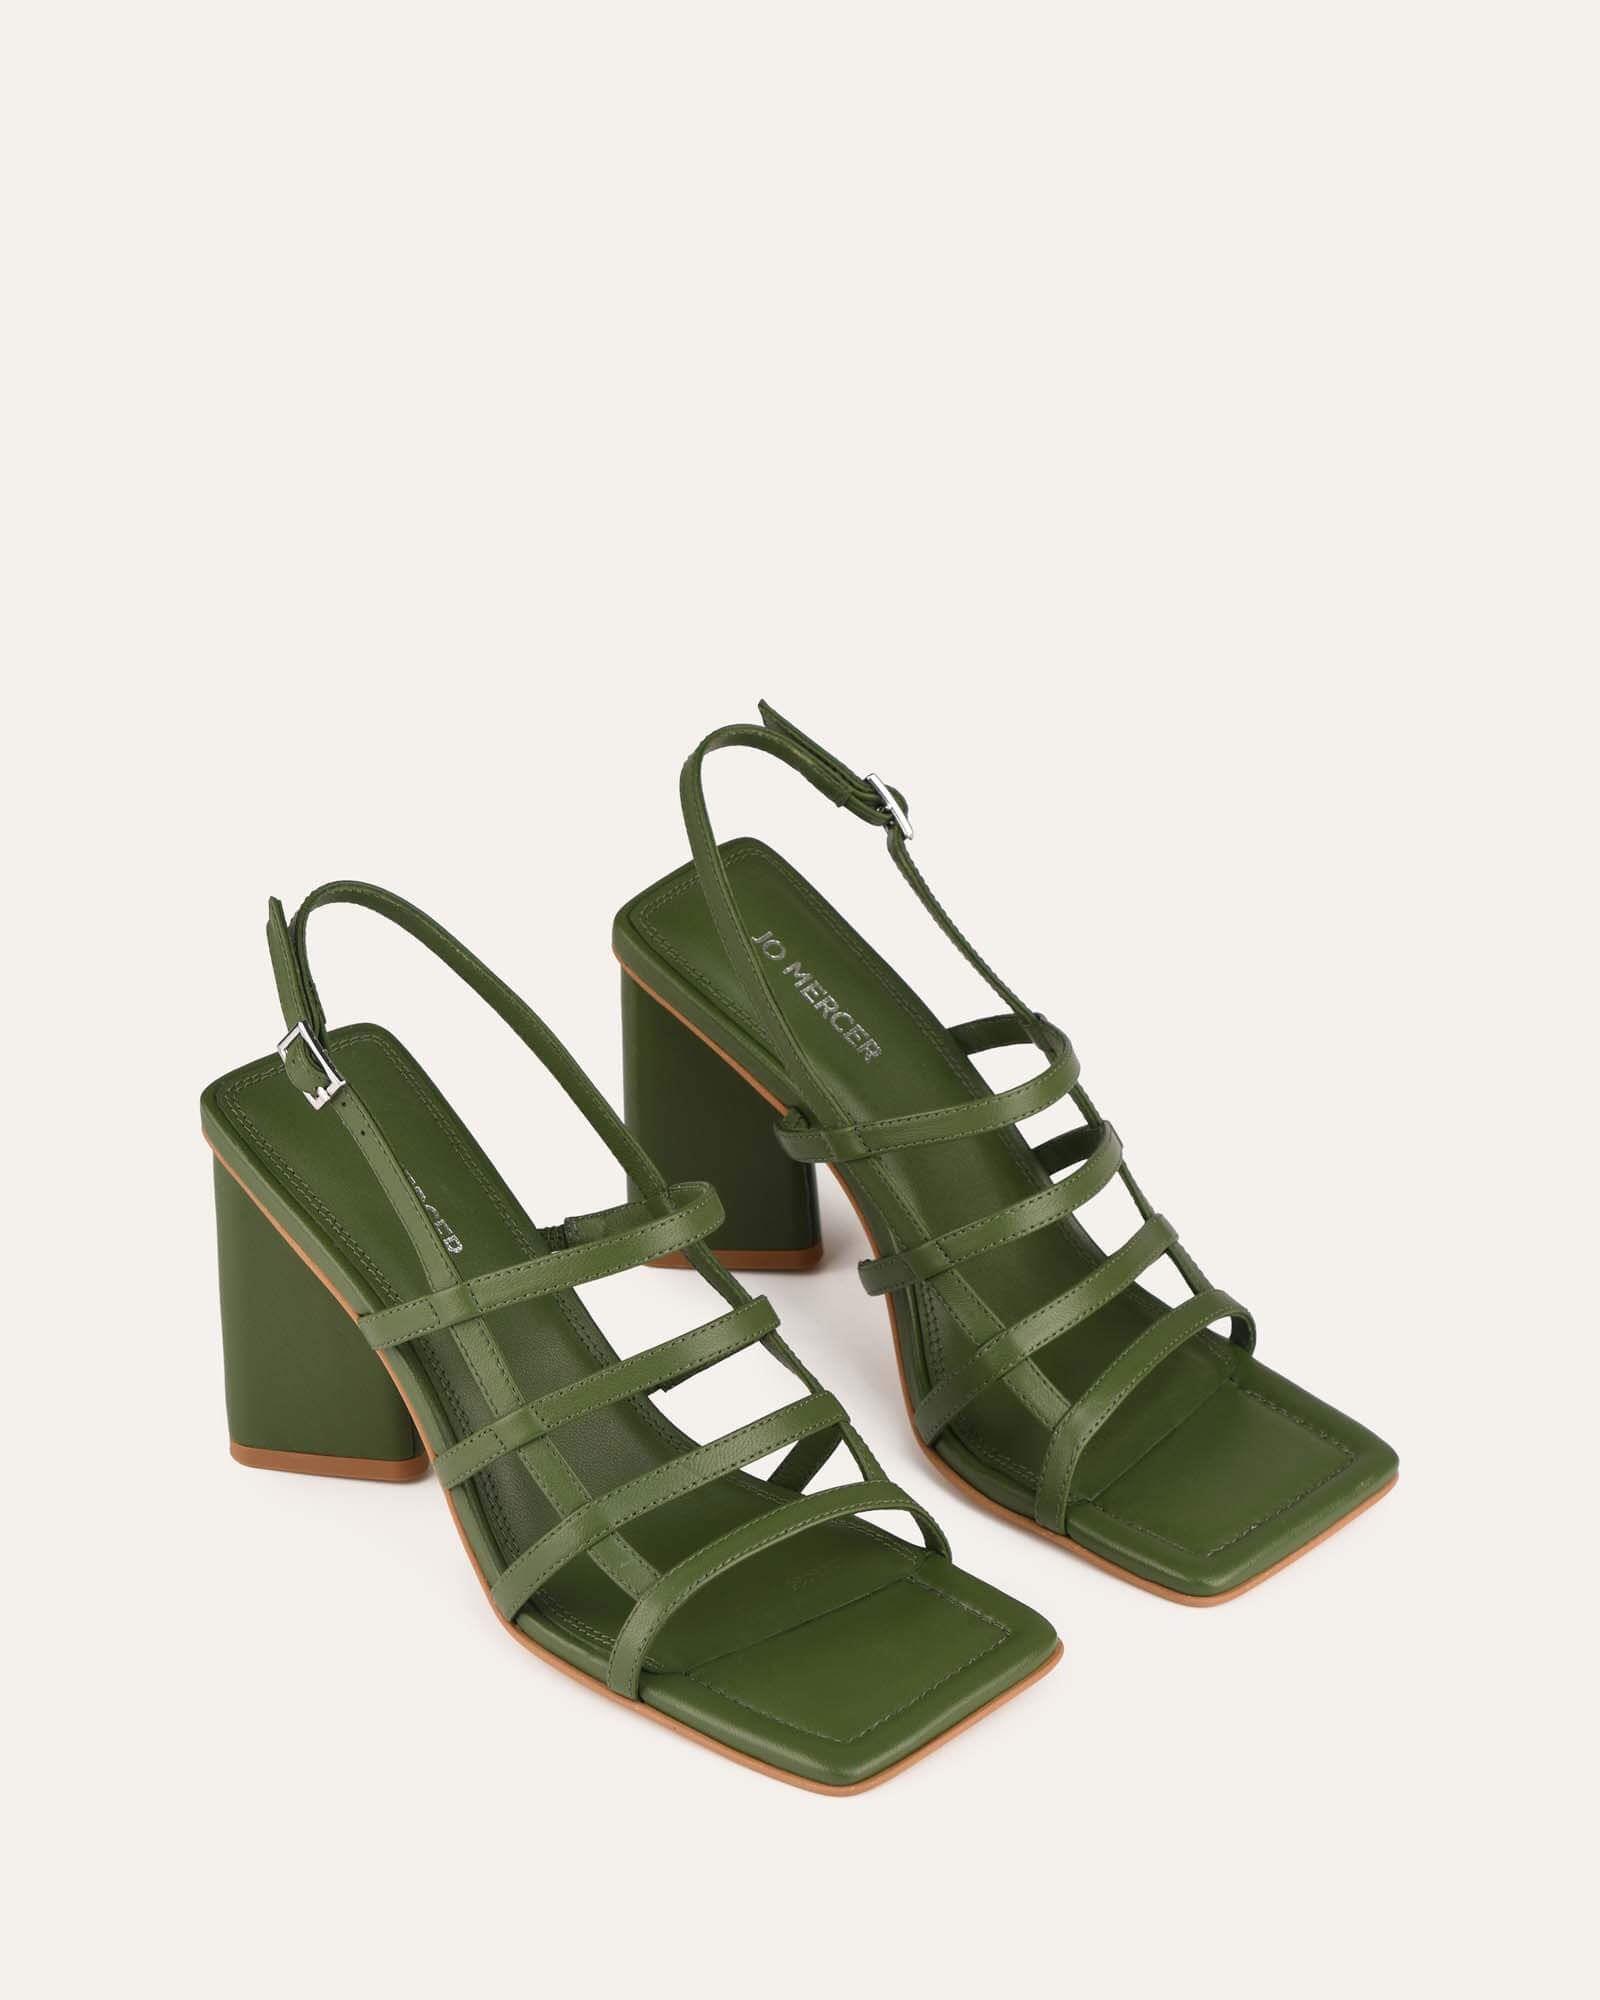 Green Patent Heels - High Heel Sandals - Strappy High Heels - Lulus